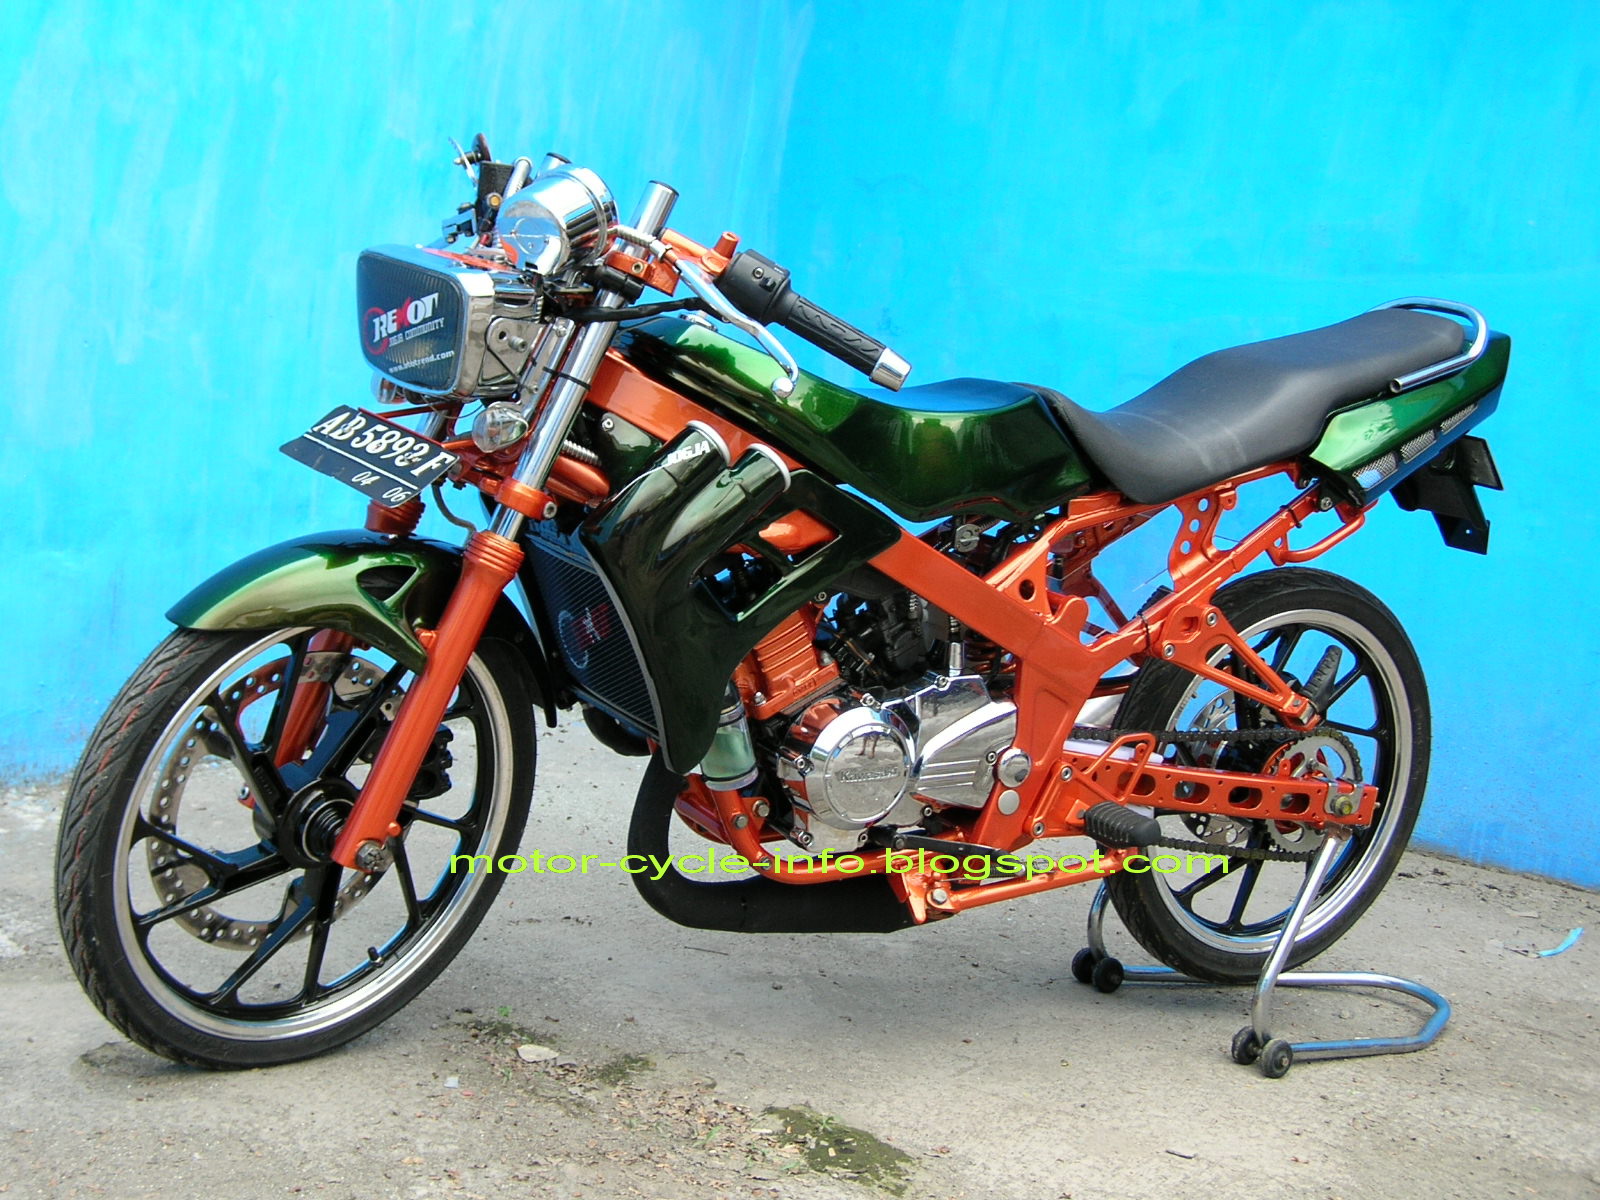 The Best Motor Modification Gambar Kawasaki Ninja Modif Extreme Jogja